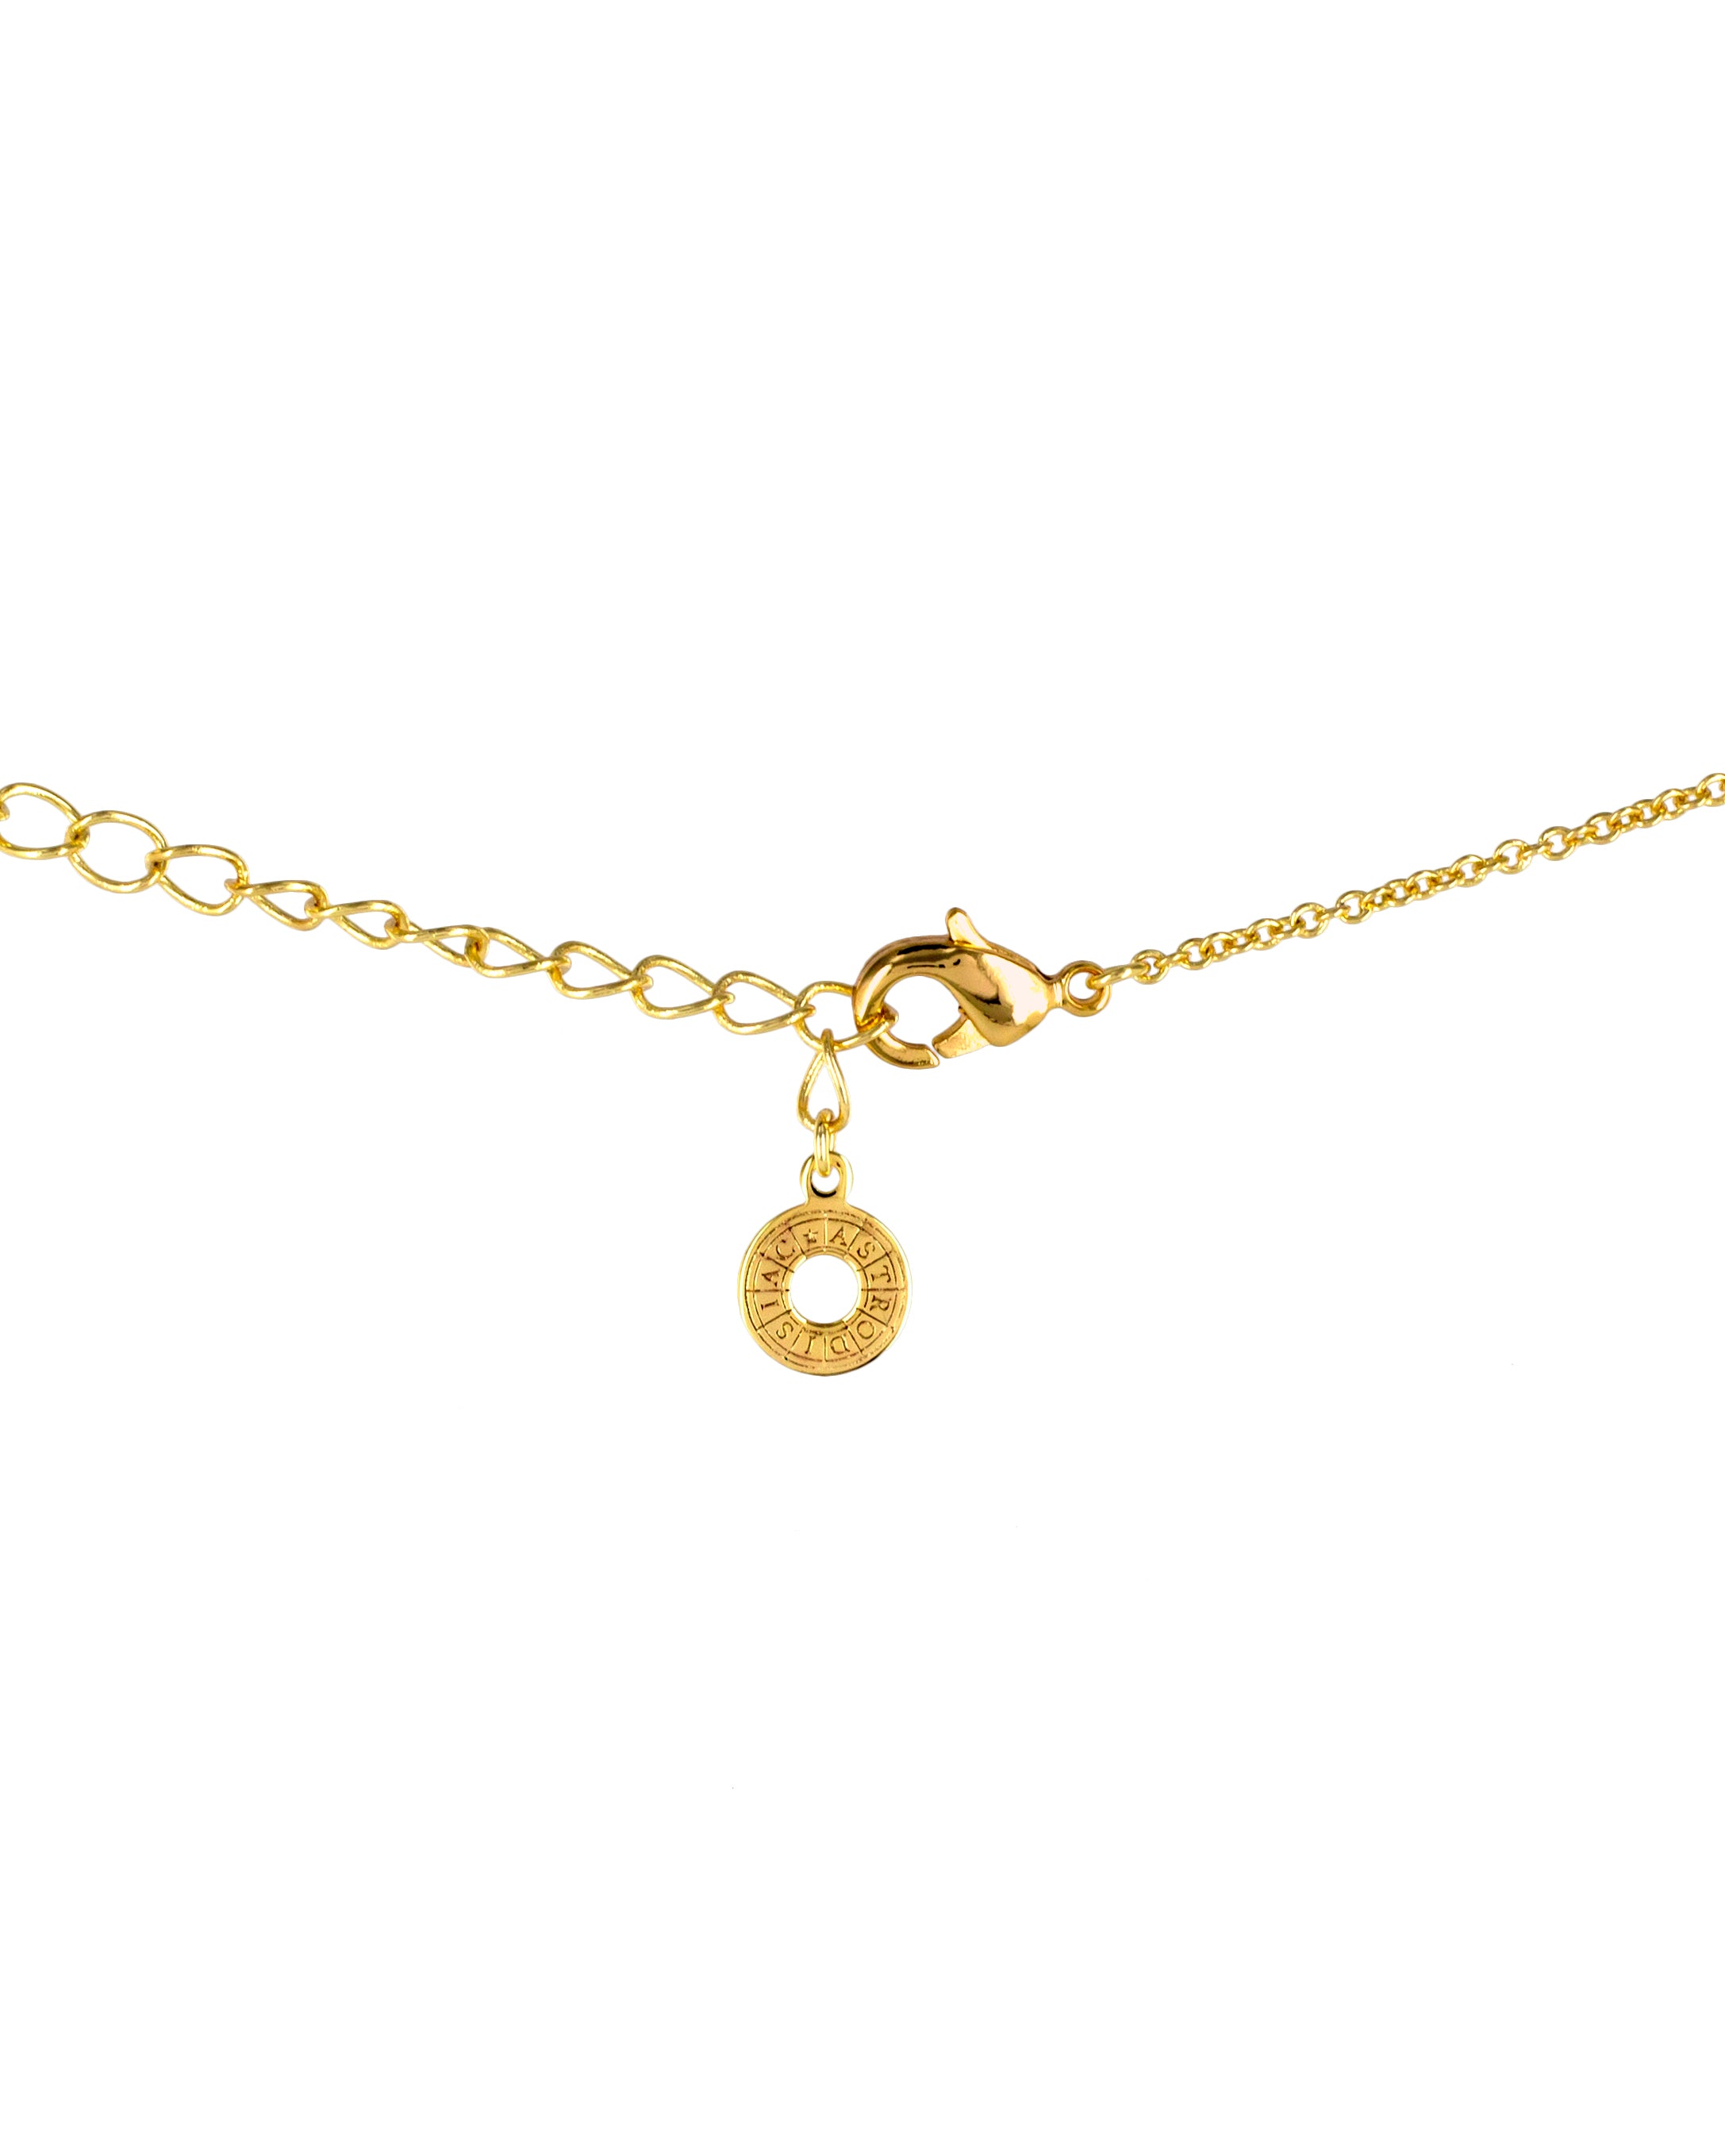 collier vierge - astrodisiac - bijoux - paris - claire naa - jewels - necklace virgo 